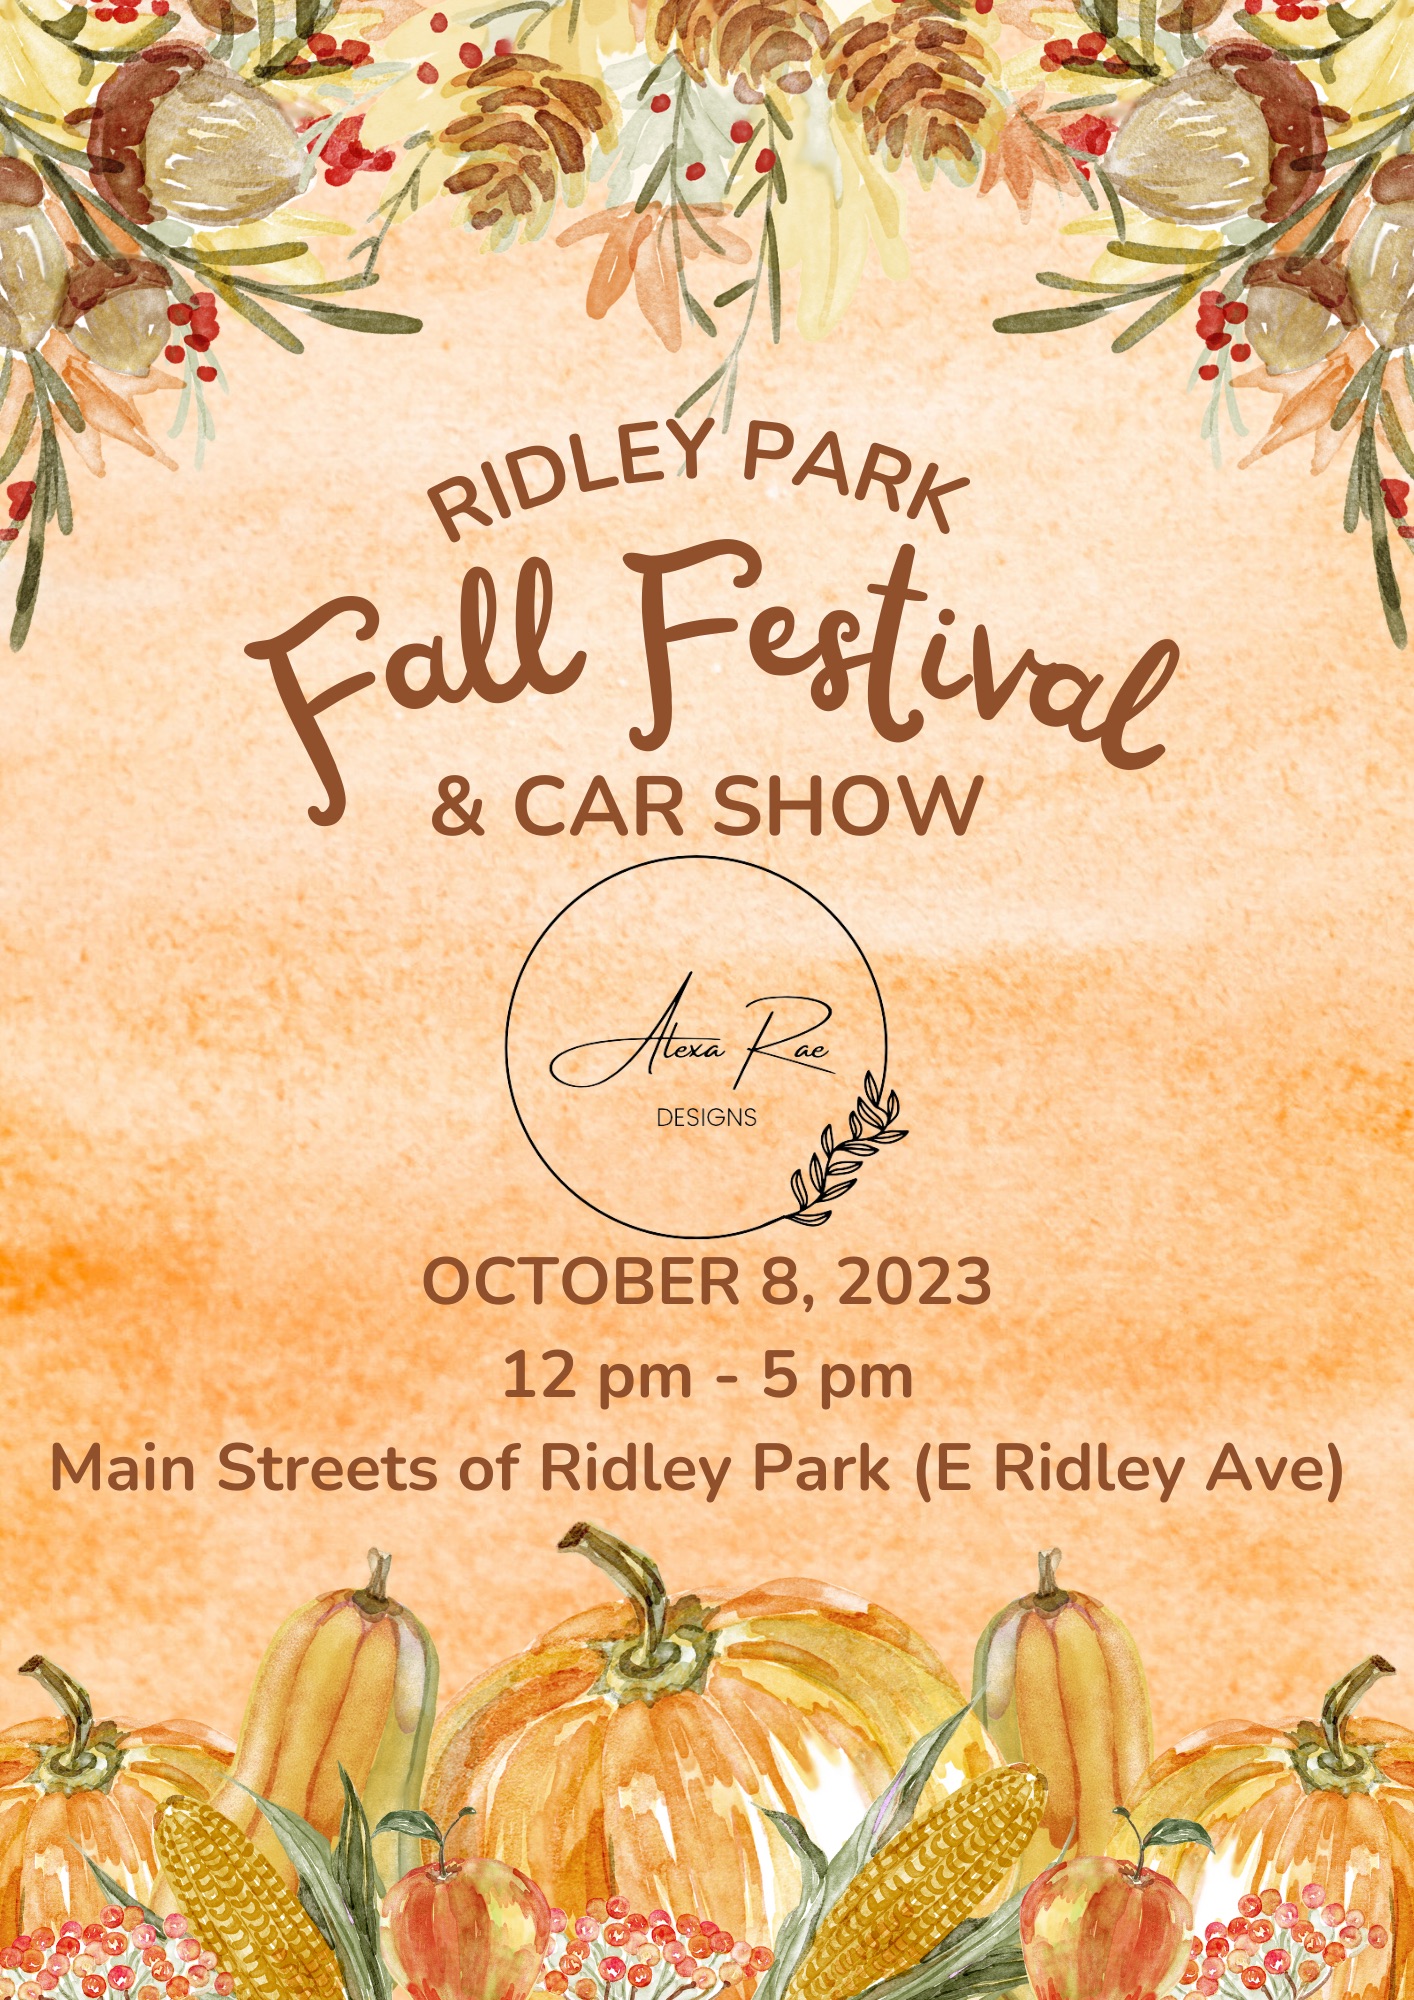 Ridley Park Fall Festival